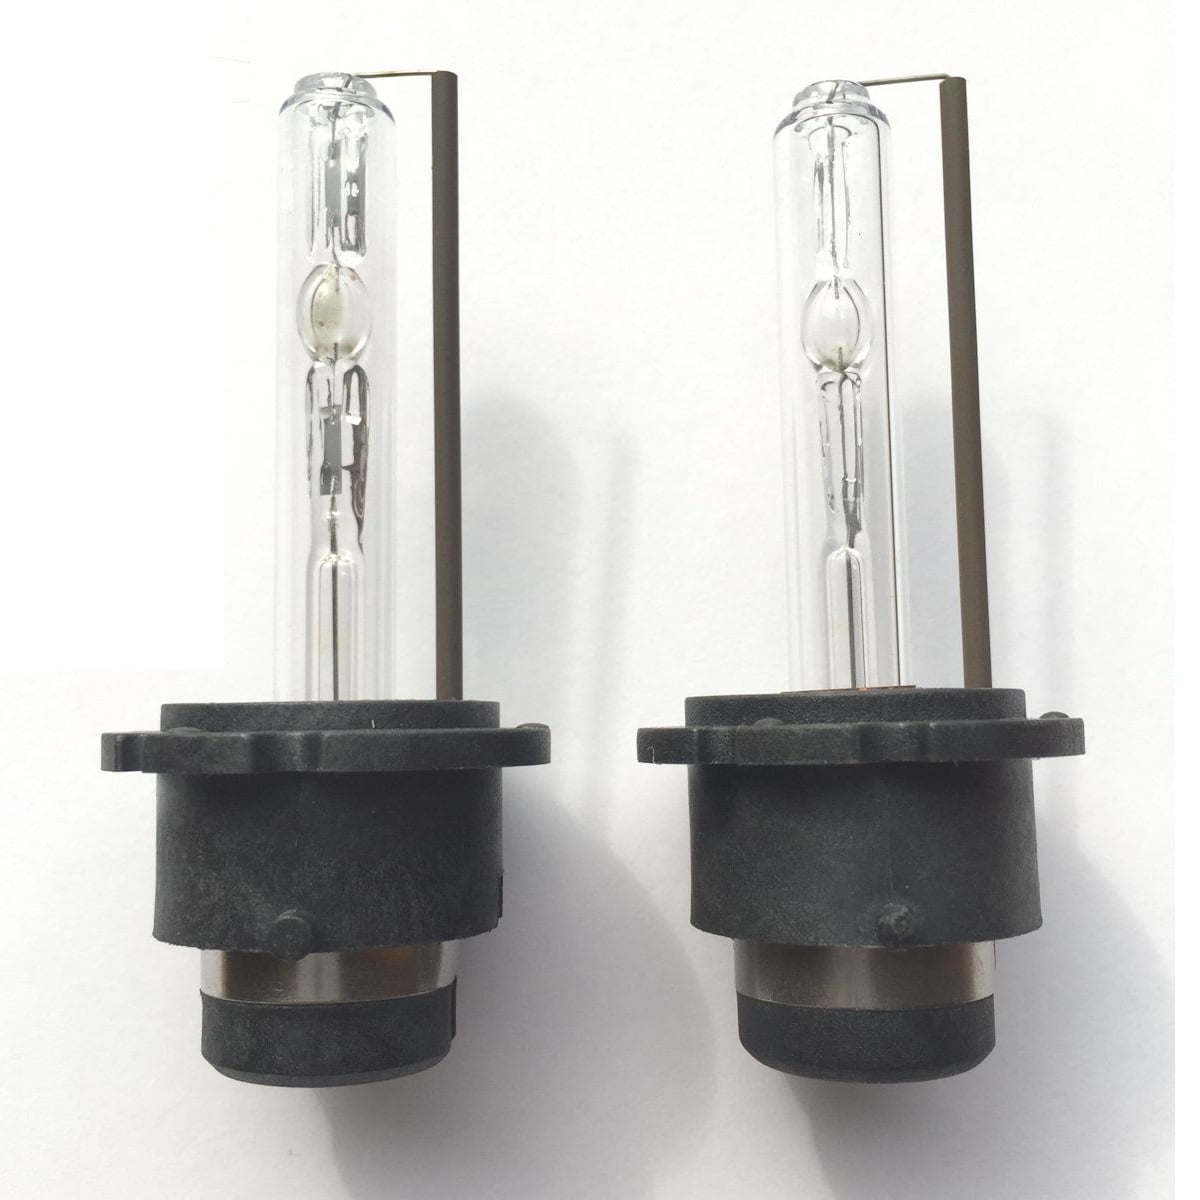 xenon headlight bulbs